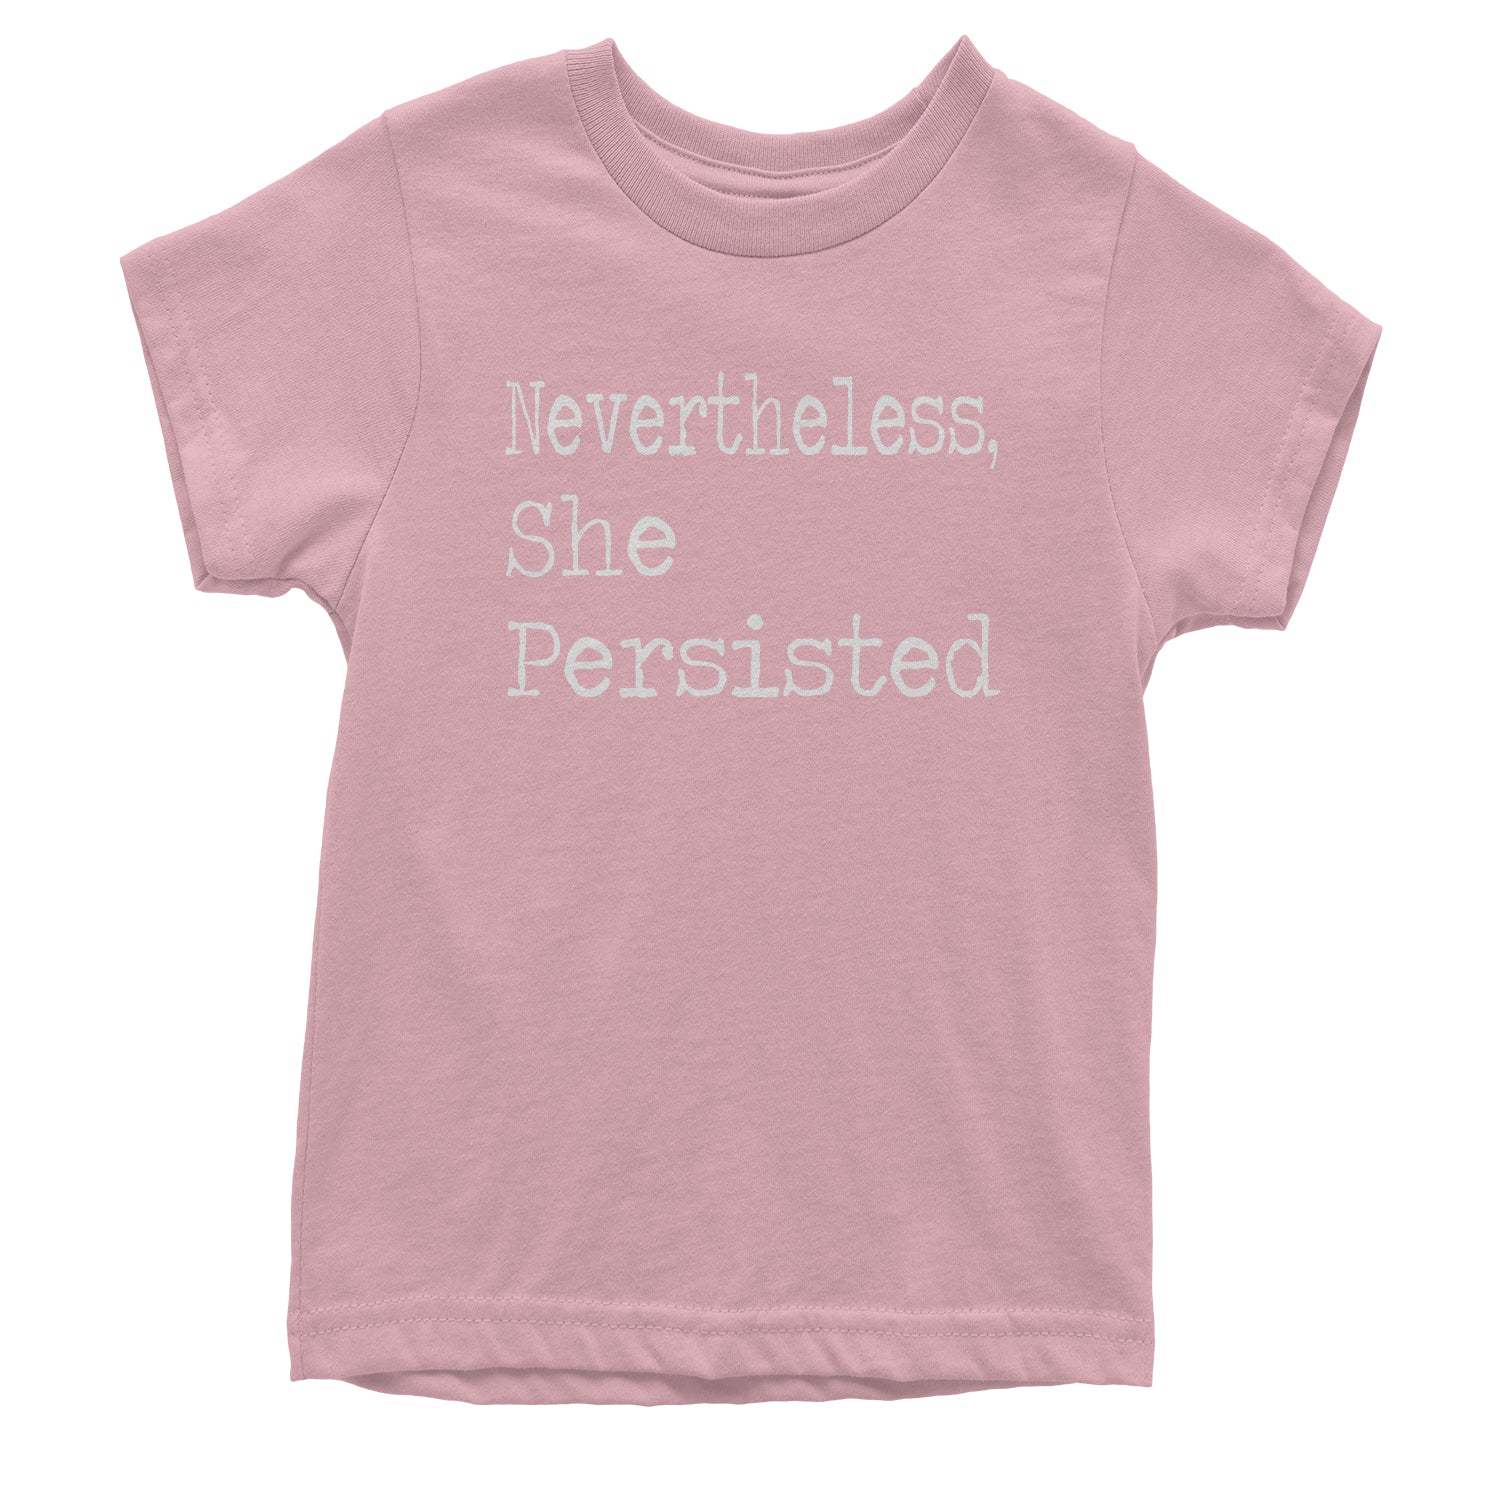 Nevertheless, She Persisted Youth T-shirt 2020, feminism, feminist, kamala, letlizspeak, mamala, mcconnell, mitch, momala, mommala by Expression Tees